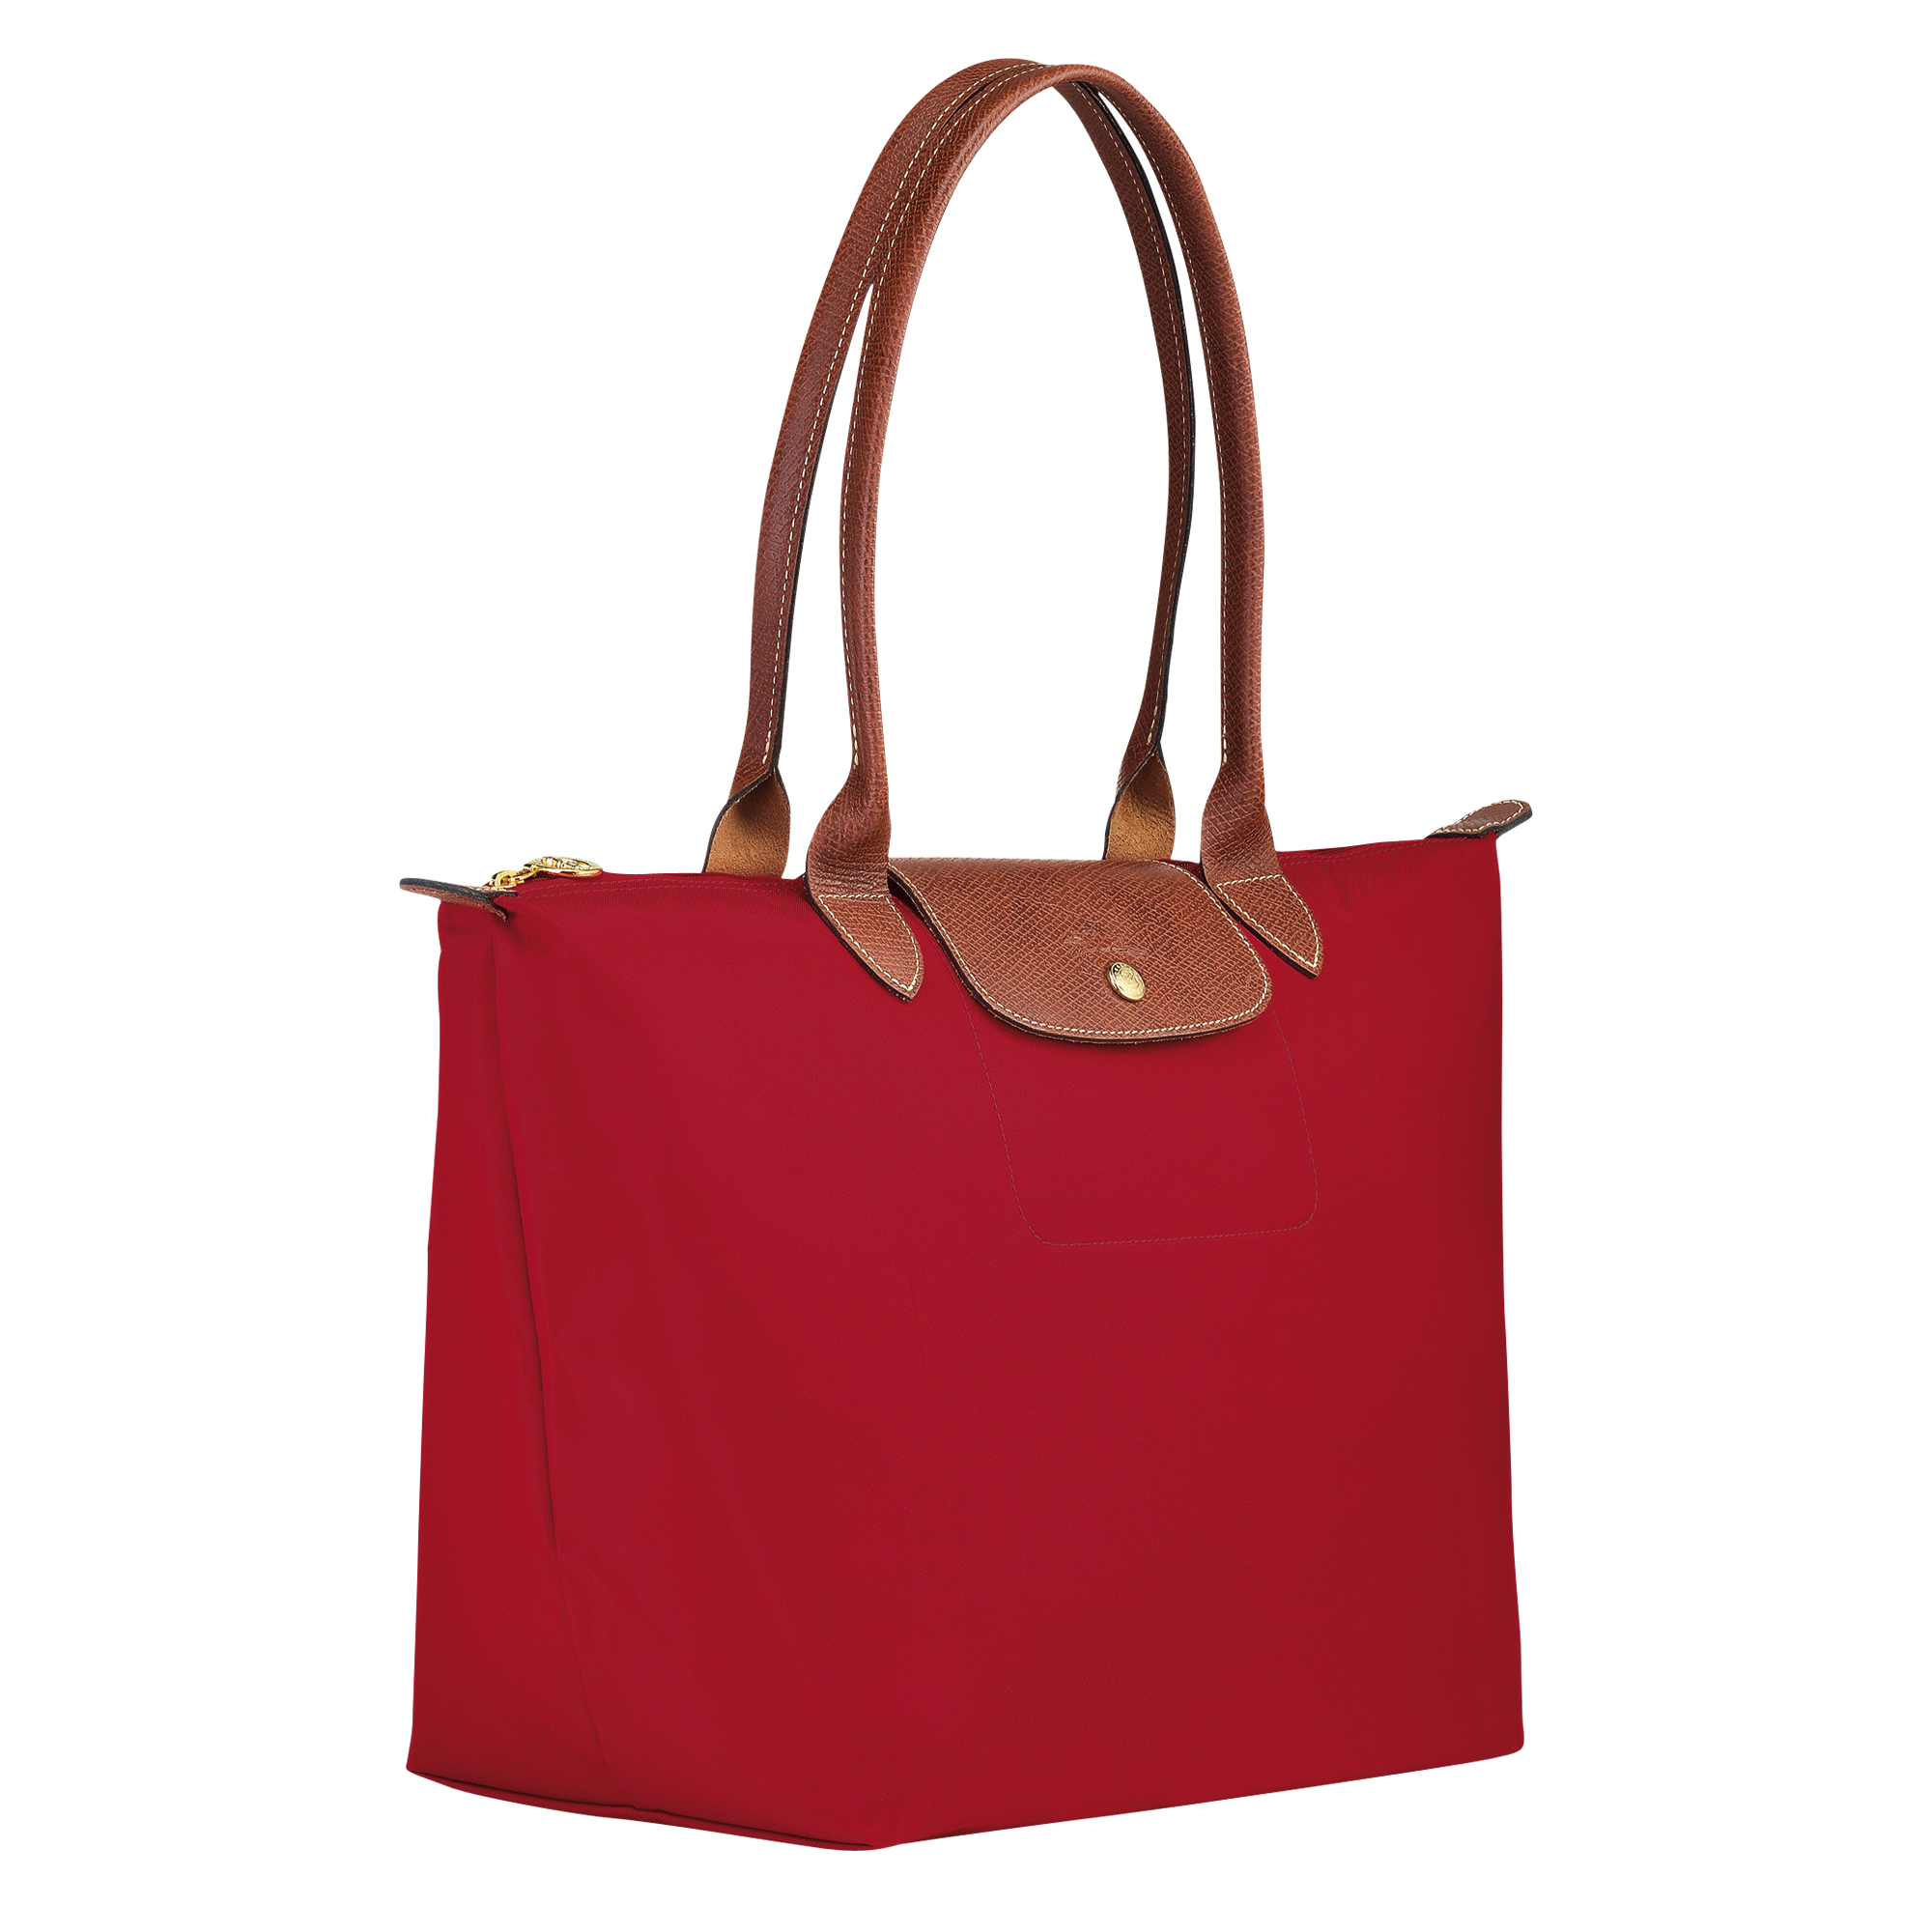 longchamp red leather handbag